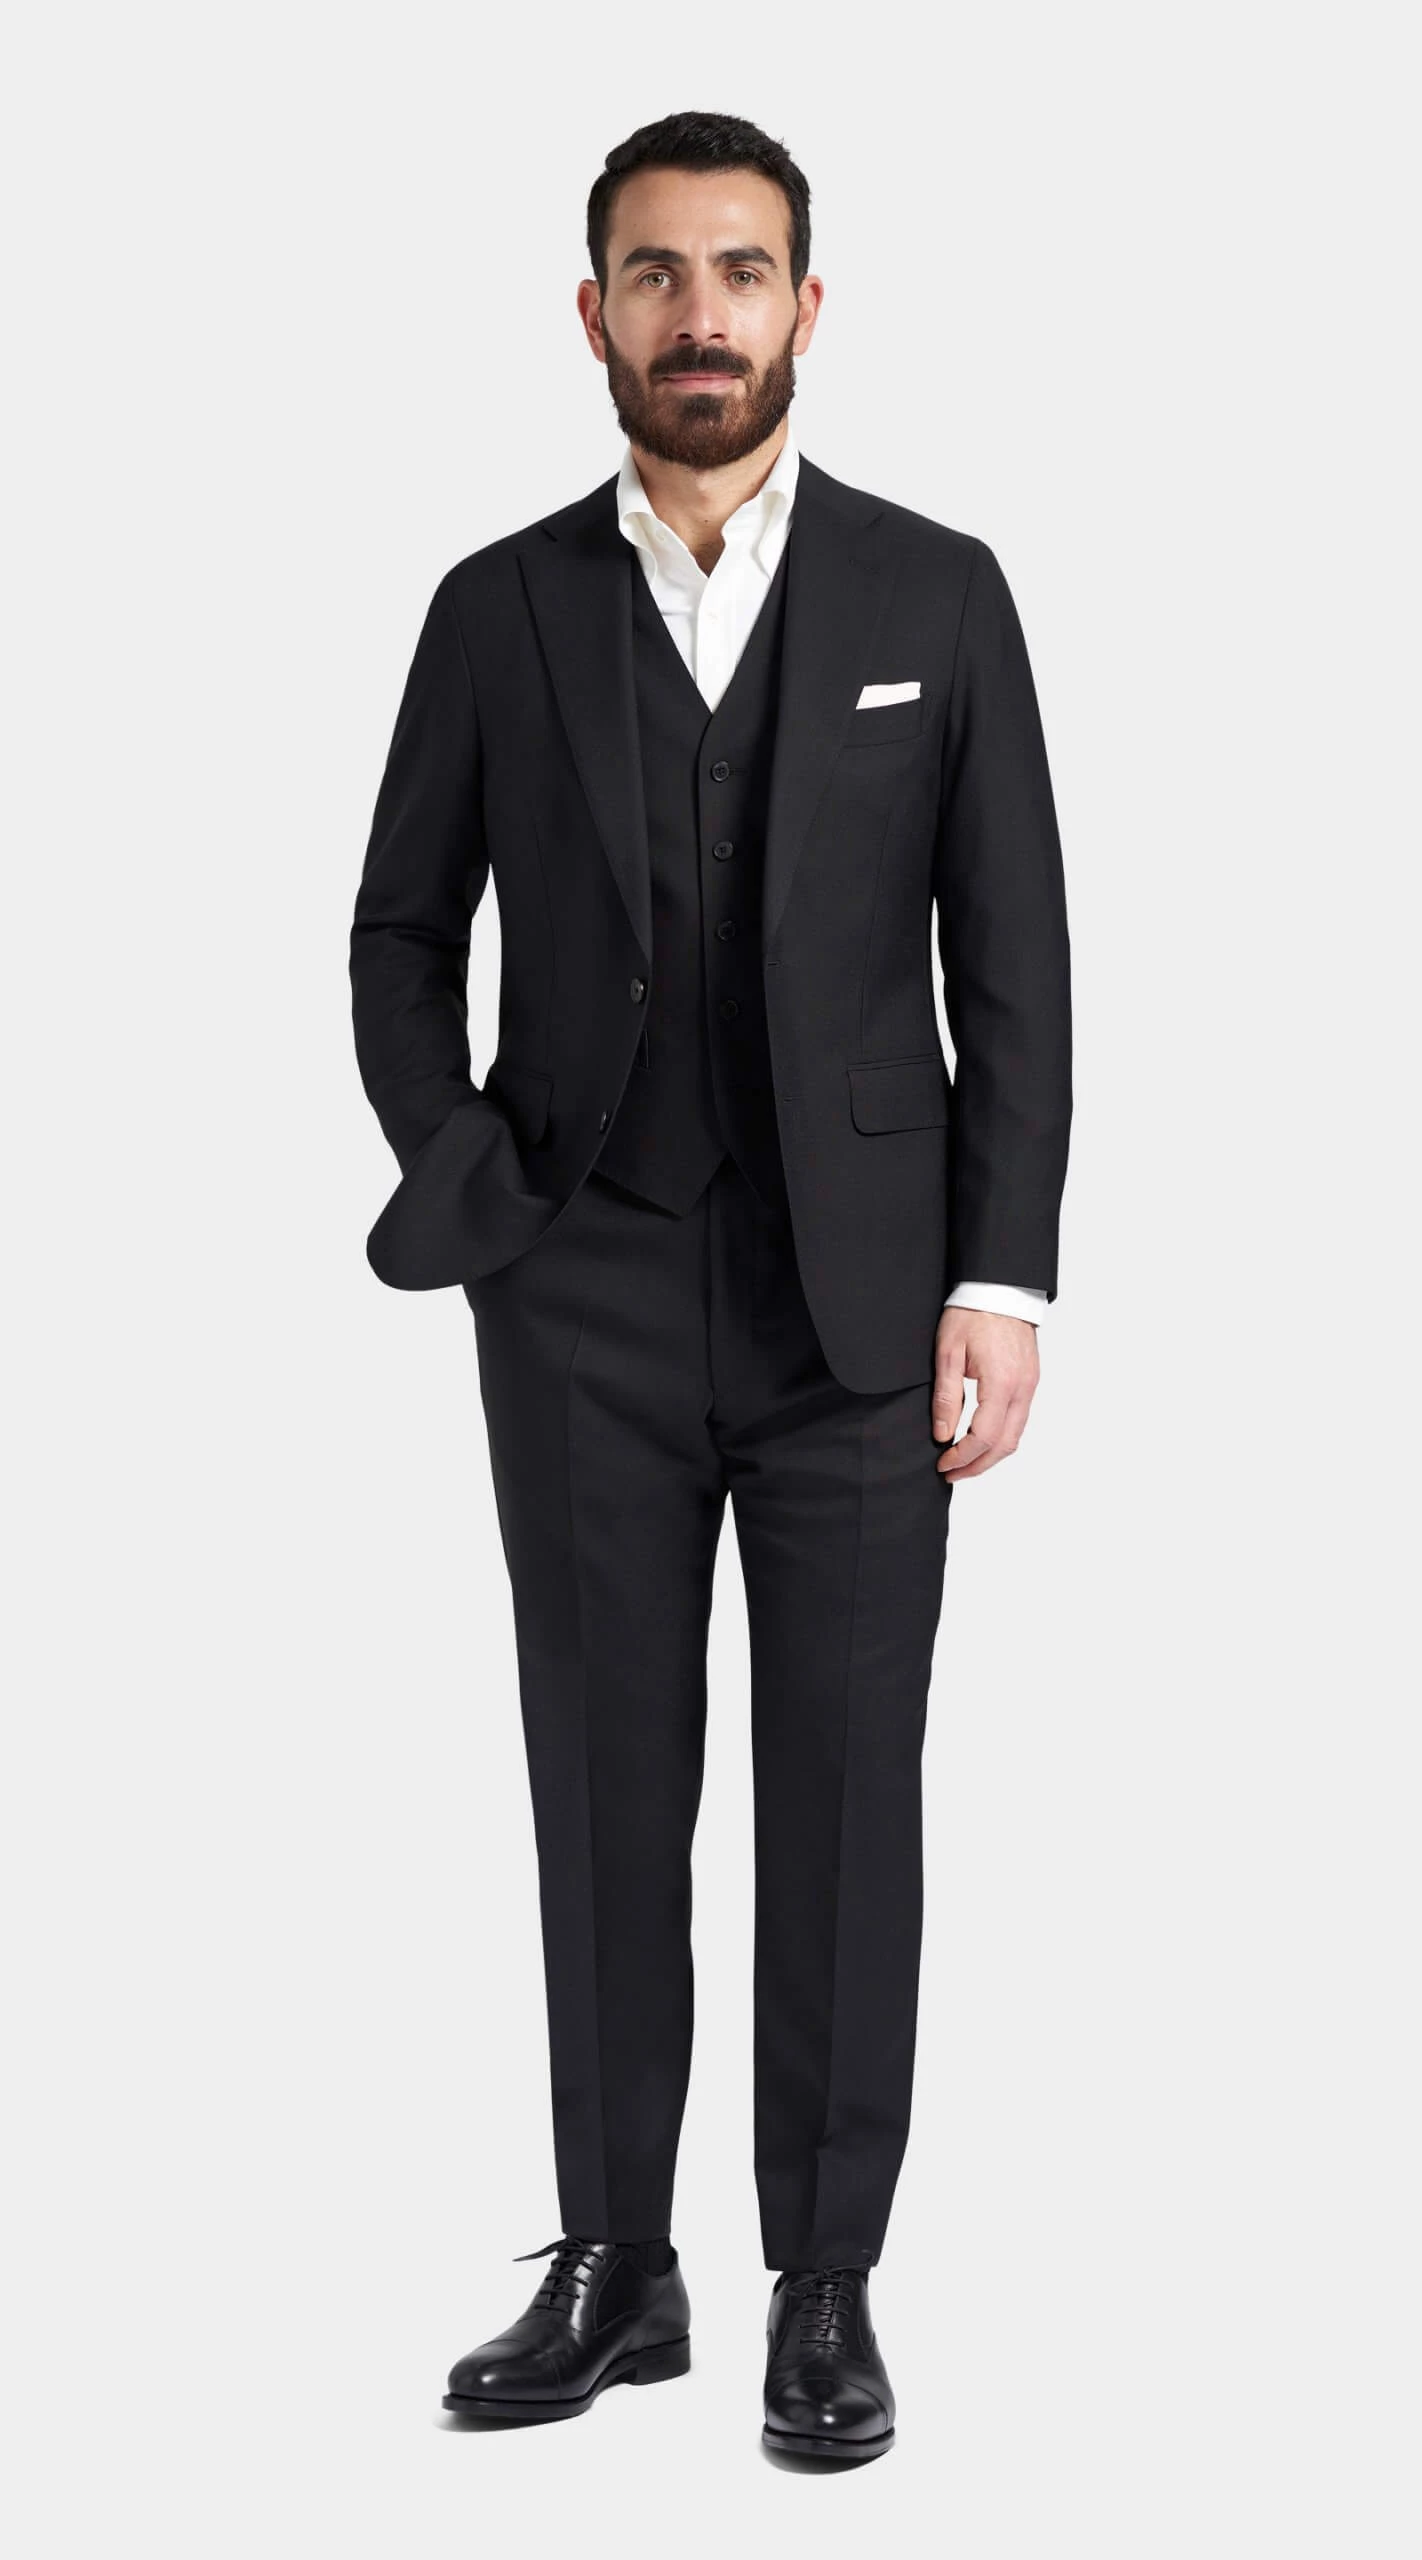 black custom suit / sort skreddersyede jakkesæt / schwarzer Maßanzug Anzug / sort svart skreddersydd dress